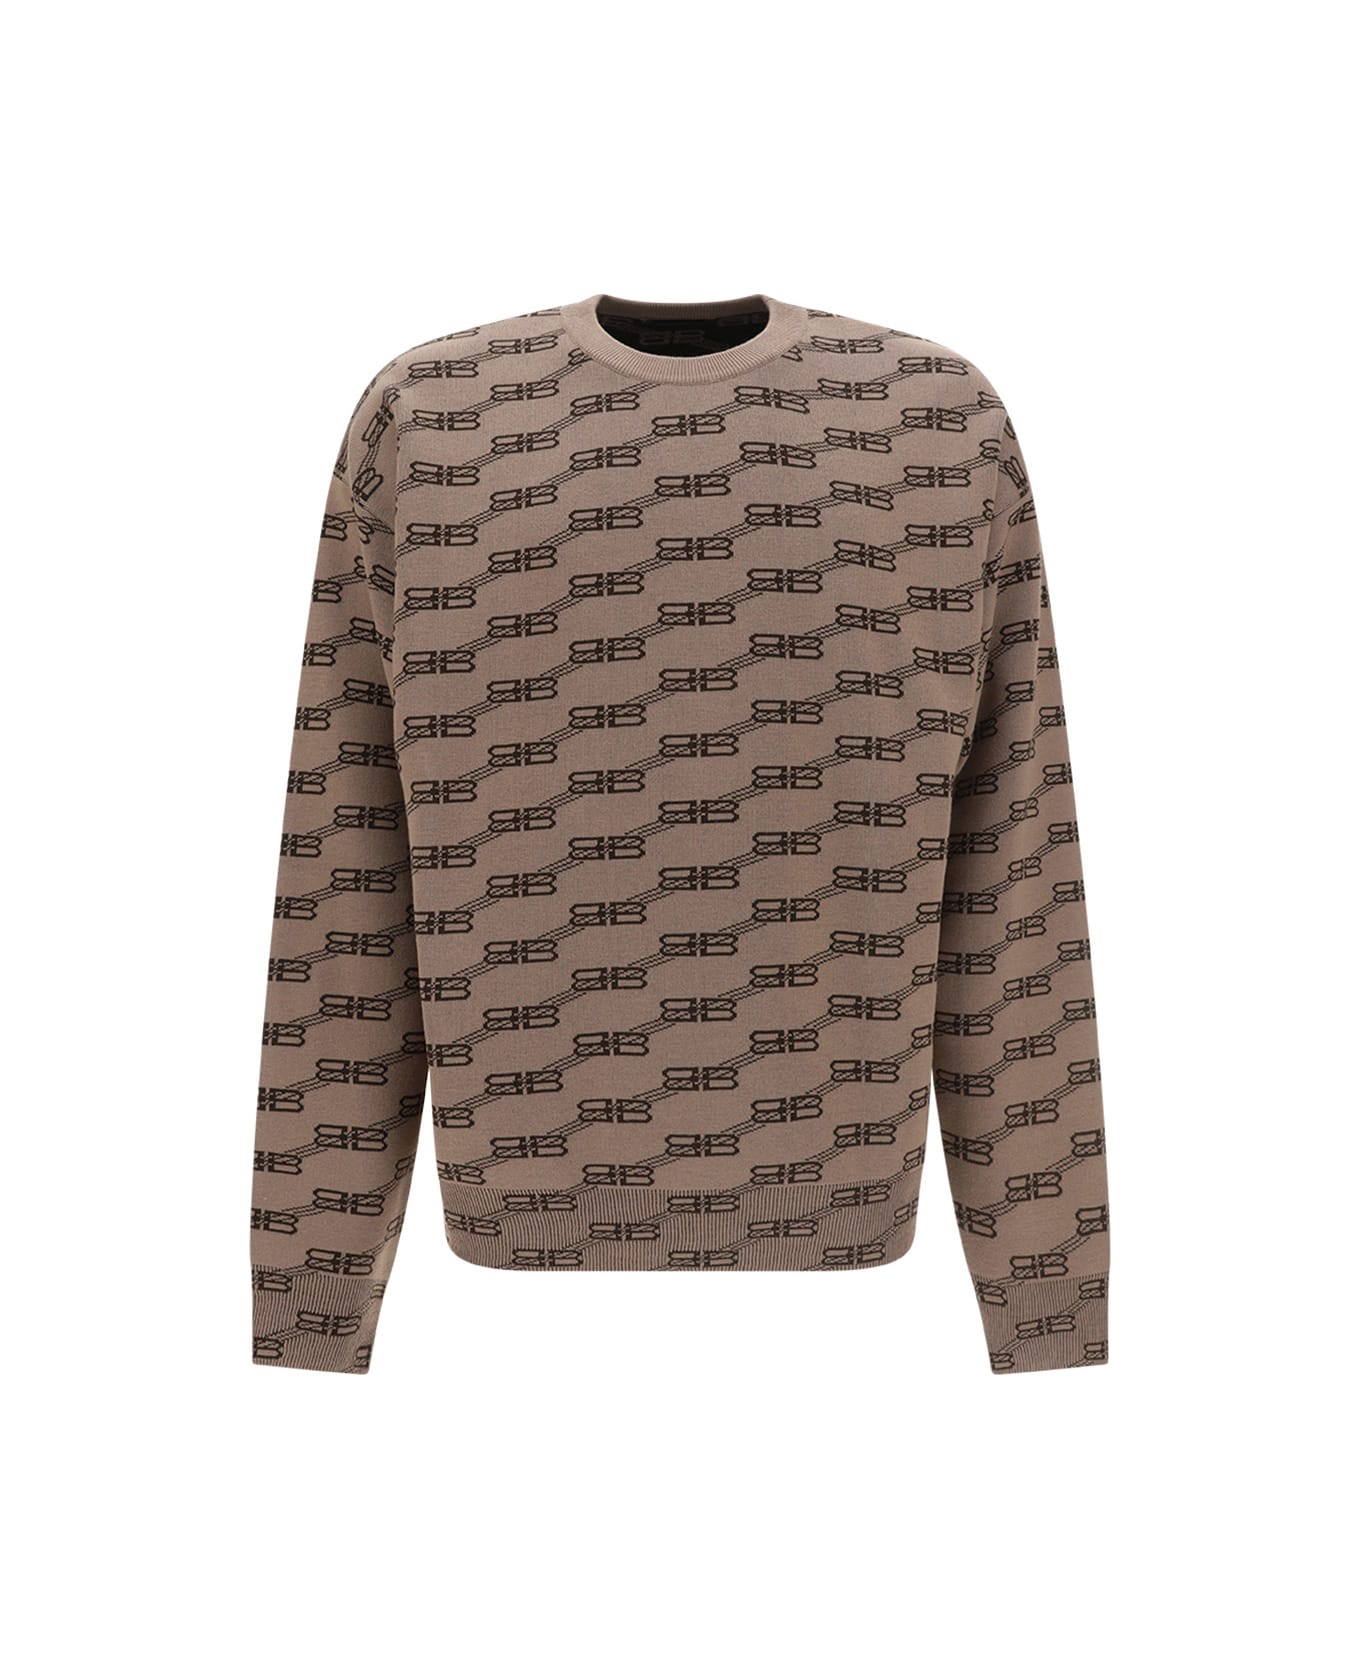 Balenciaga Sweater - Beige/brown